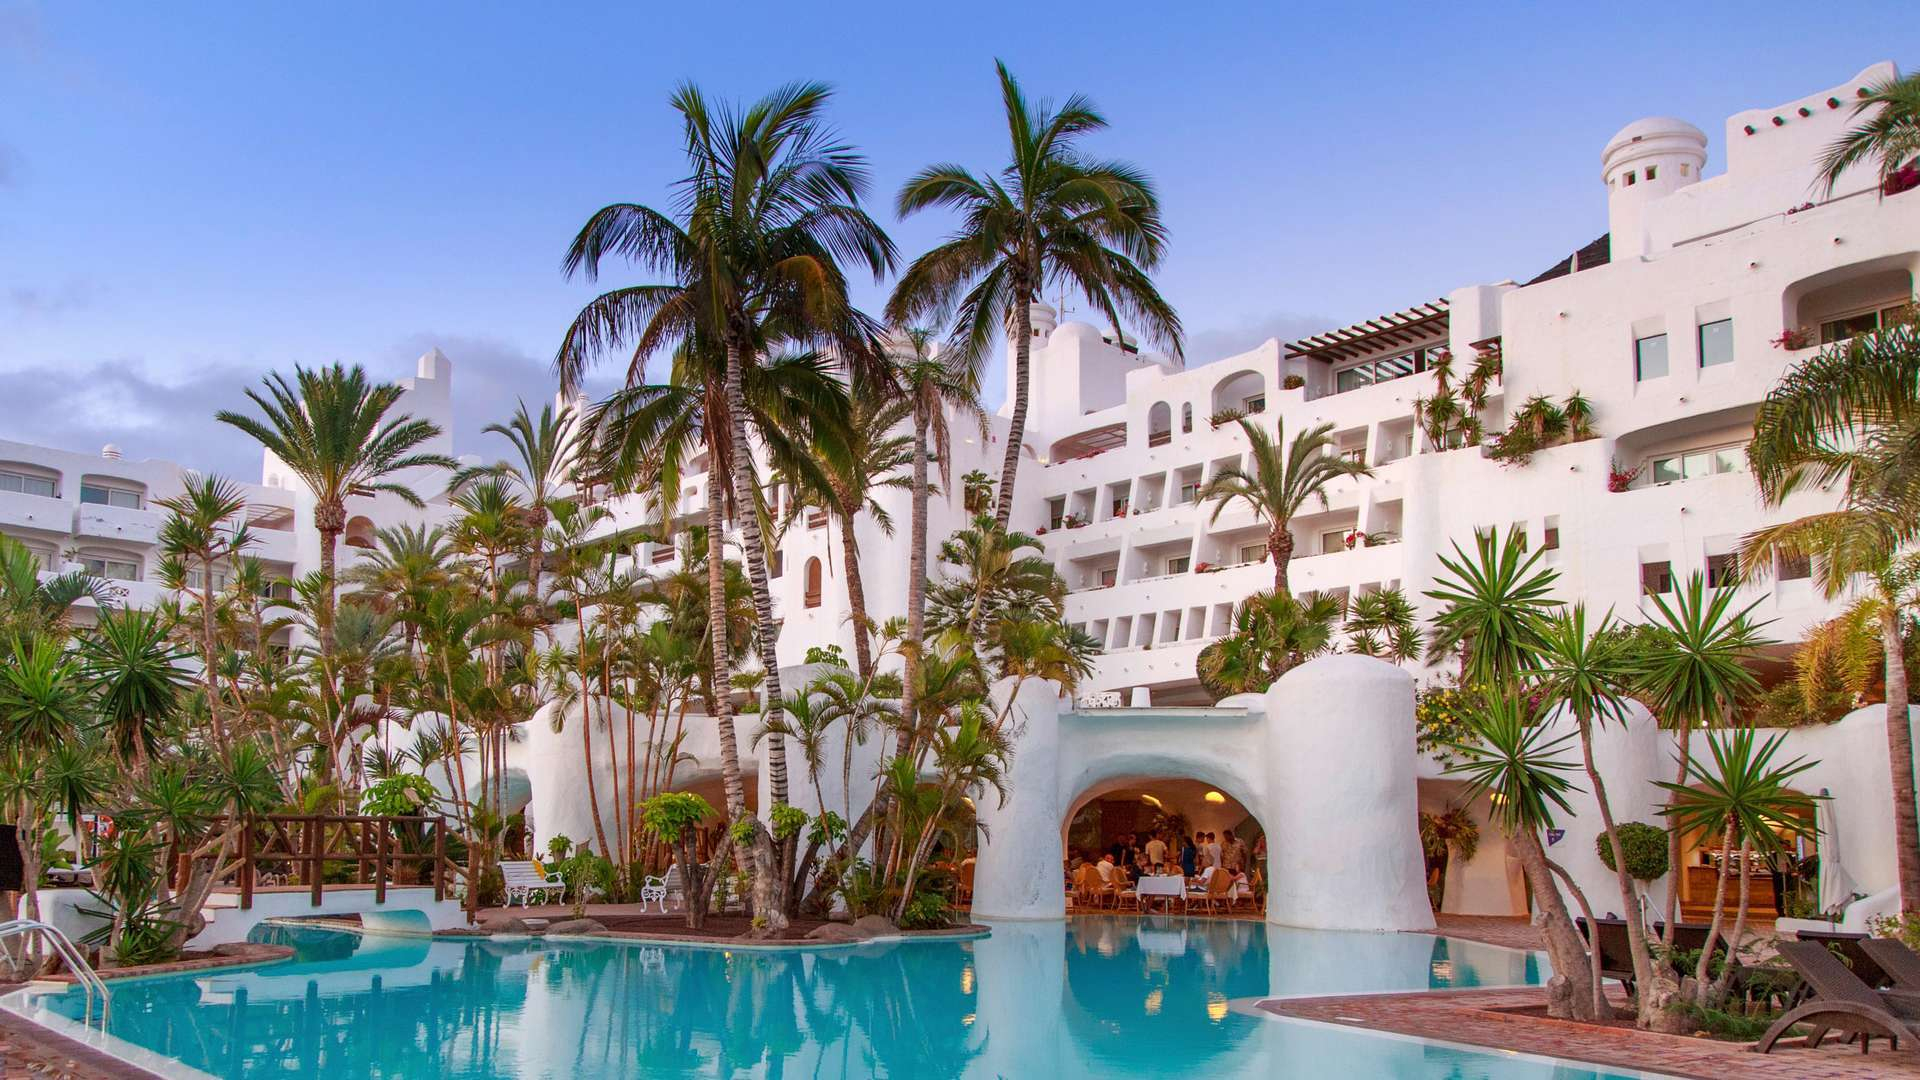 Hotel Jardin Tropical | A Kuoni Hotel In Tenerife intérieur Hotel Jardin Tropical Tenerife